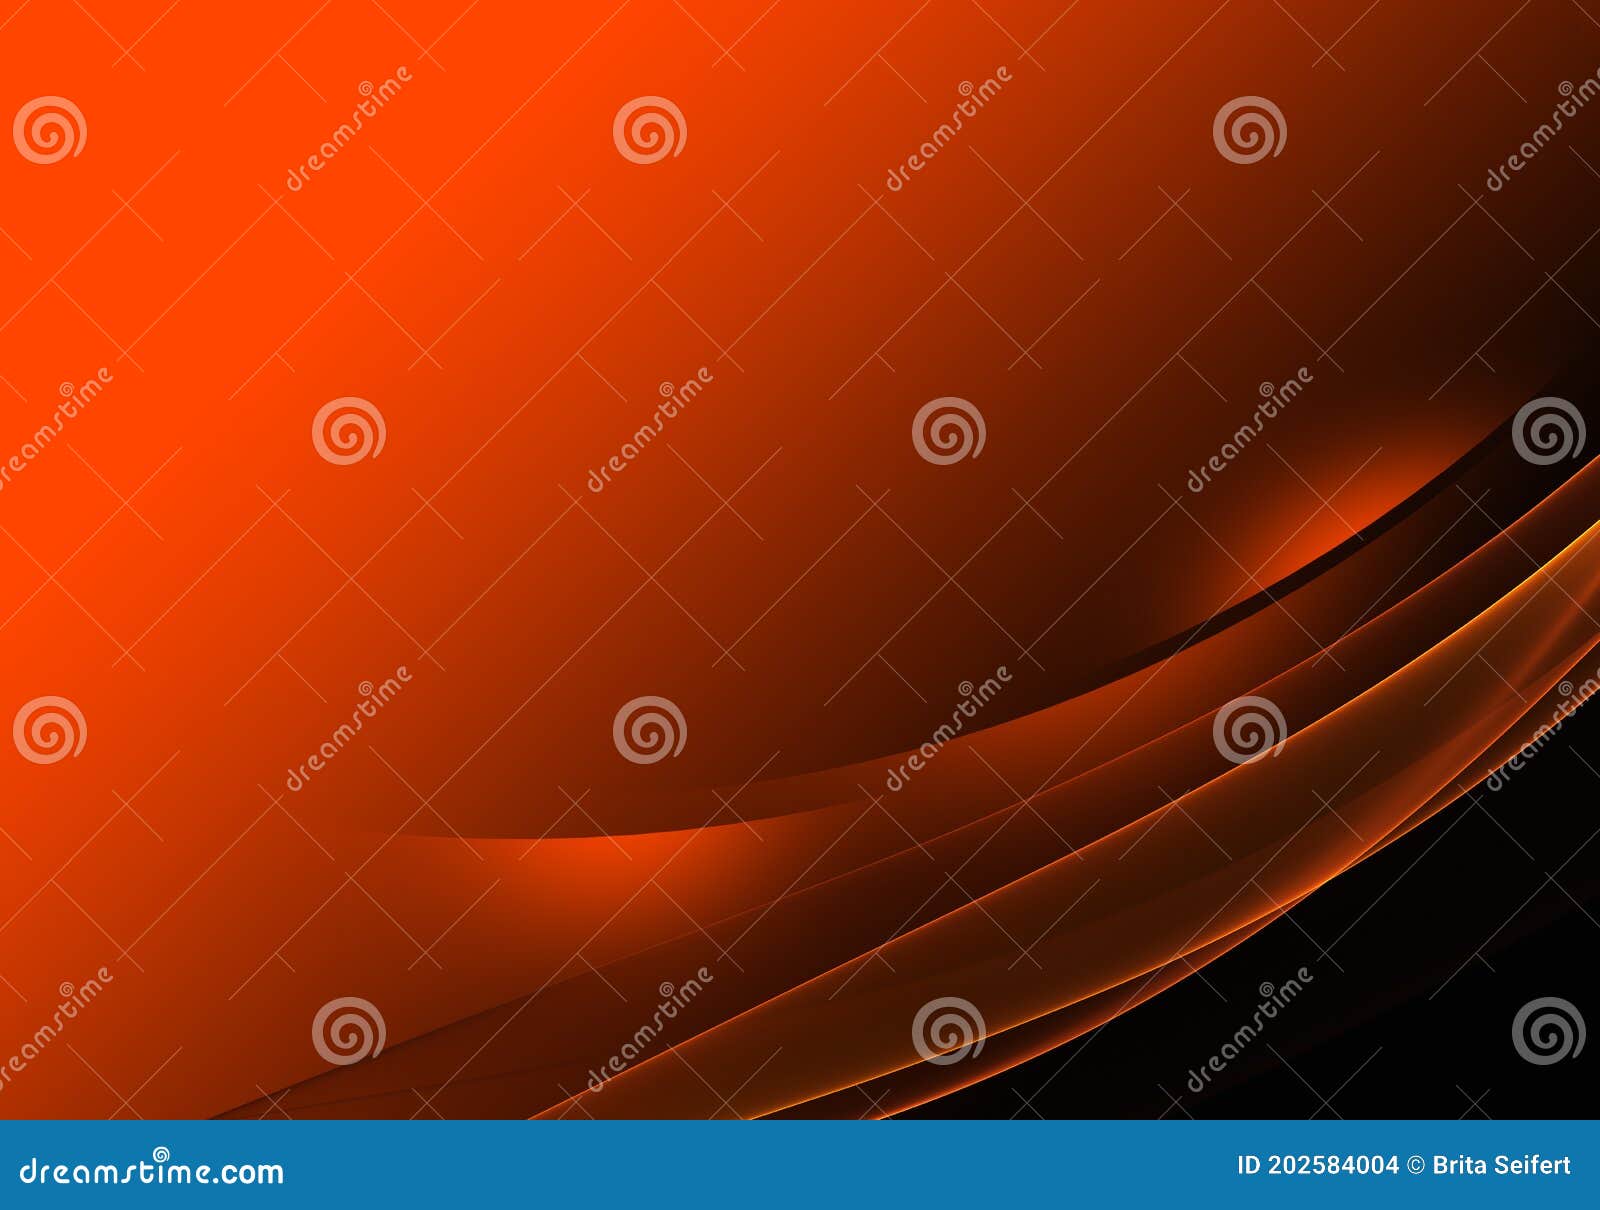 HD wallpaper: Abstract, Orange, Background, orange and black